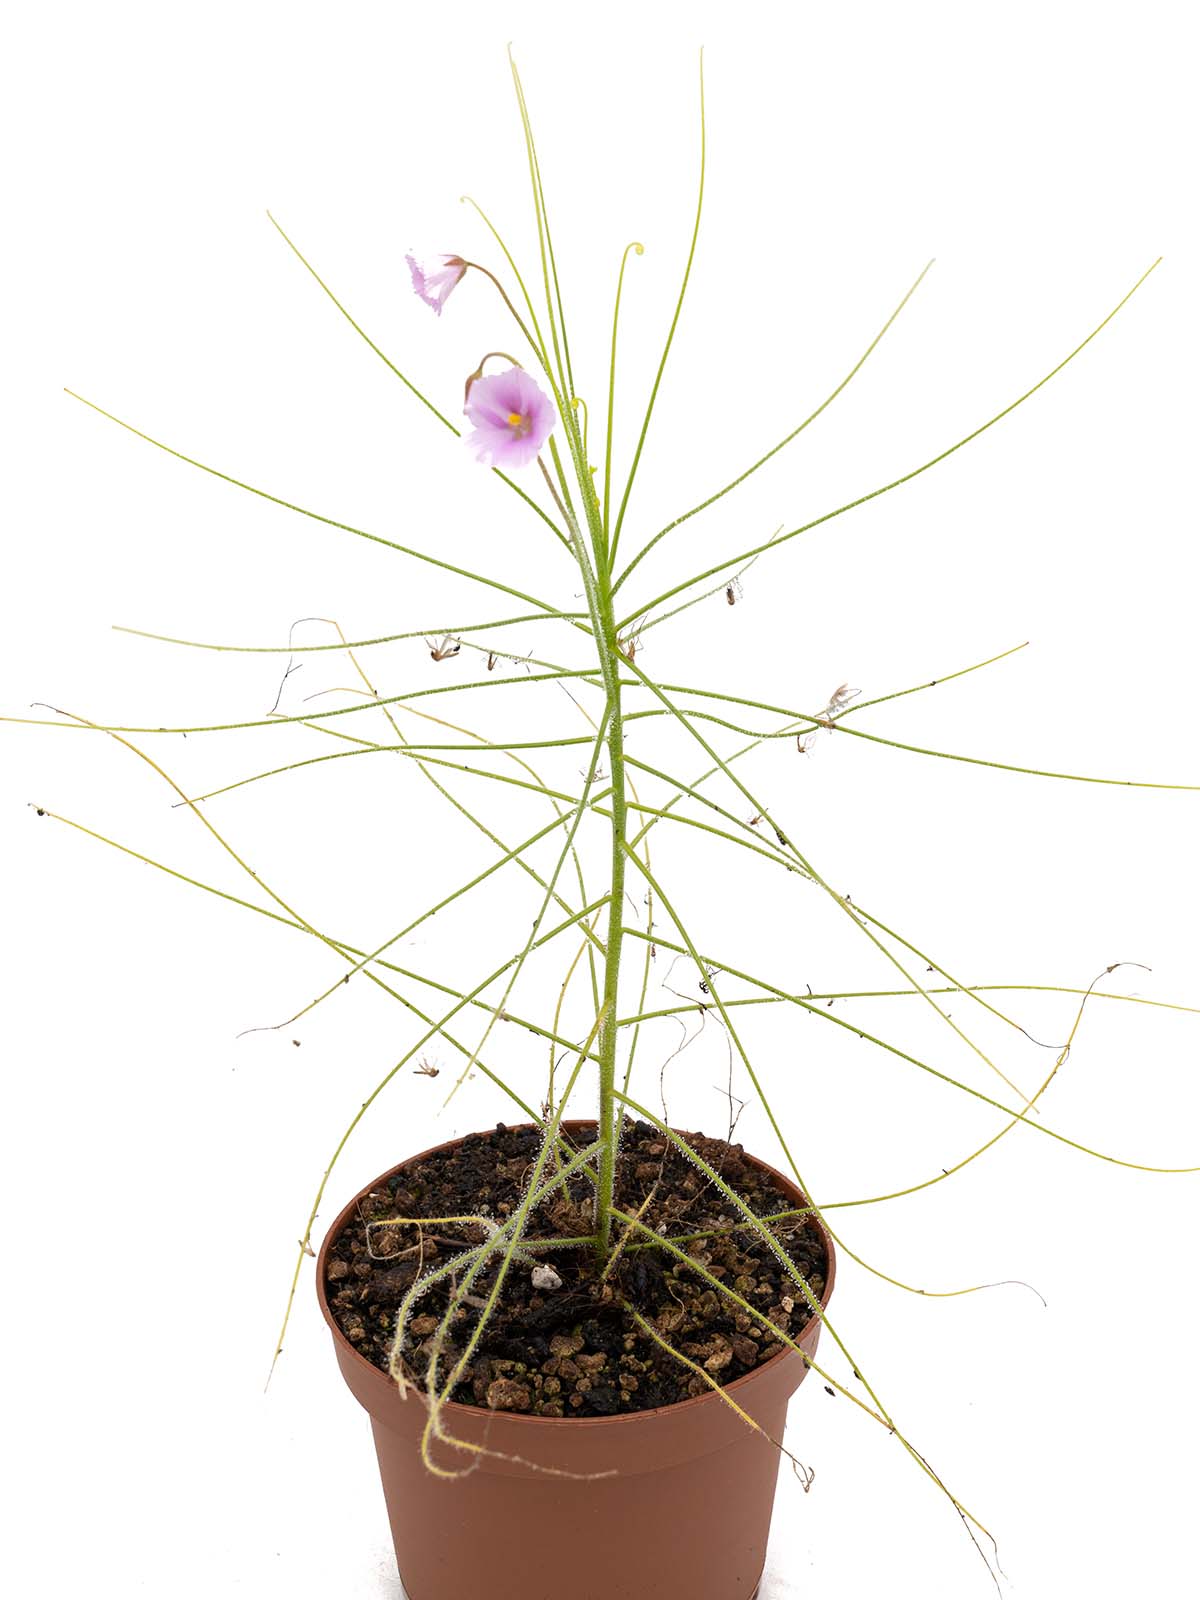 Byblis filifolia - Giant form, Pago Region, Australia